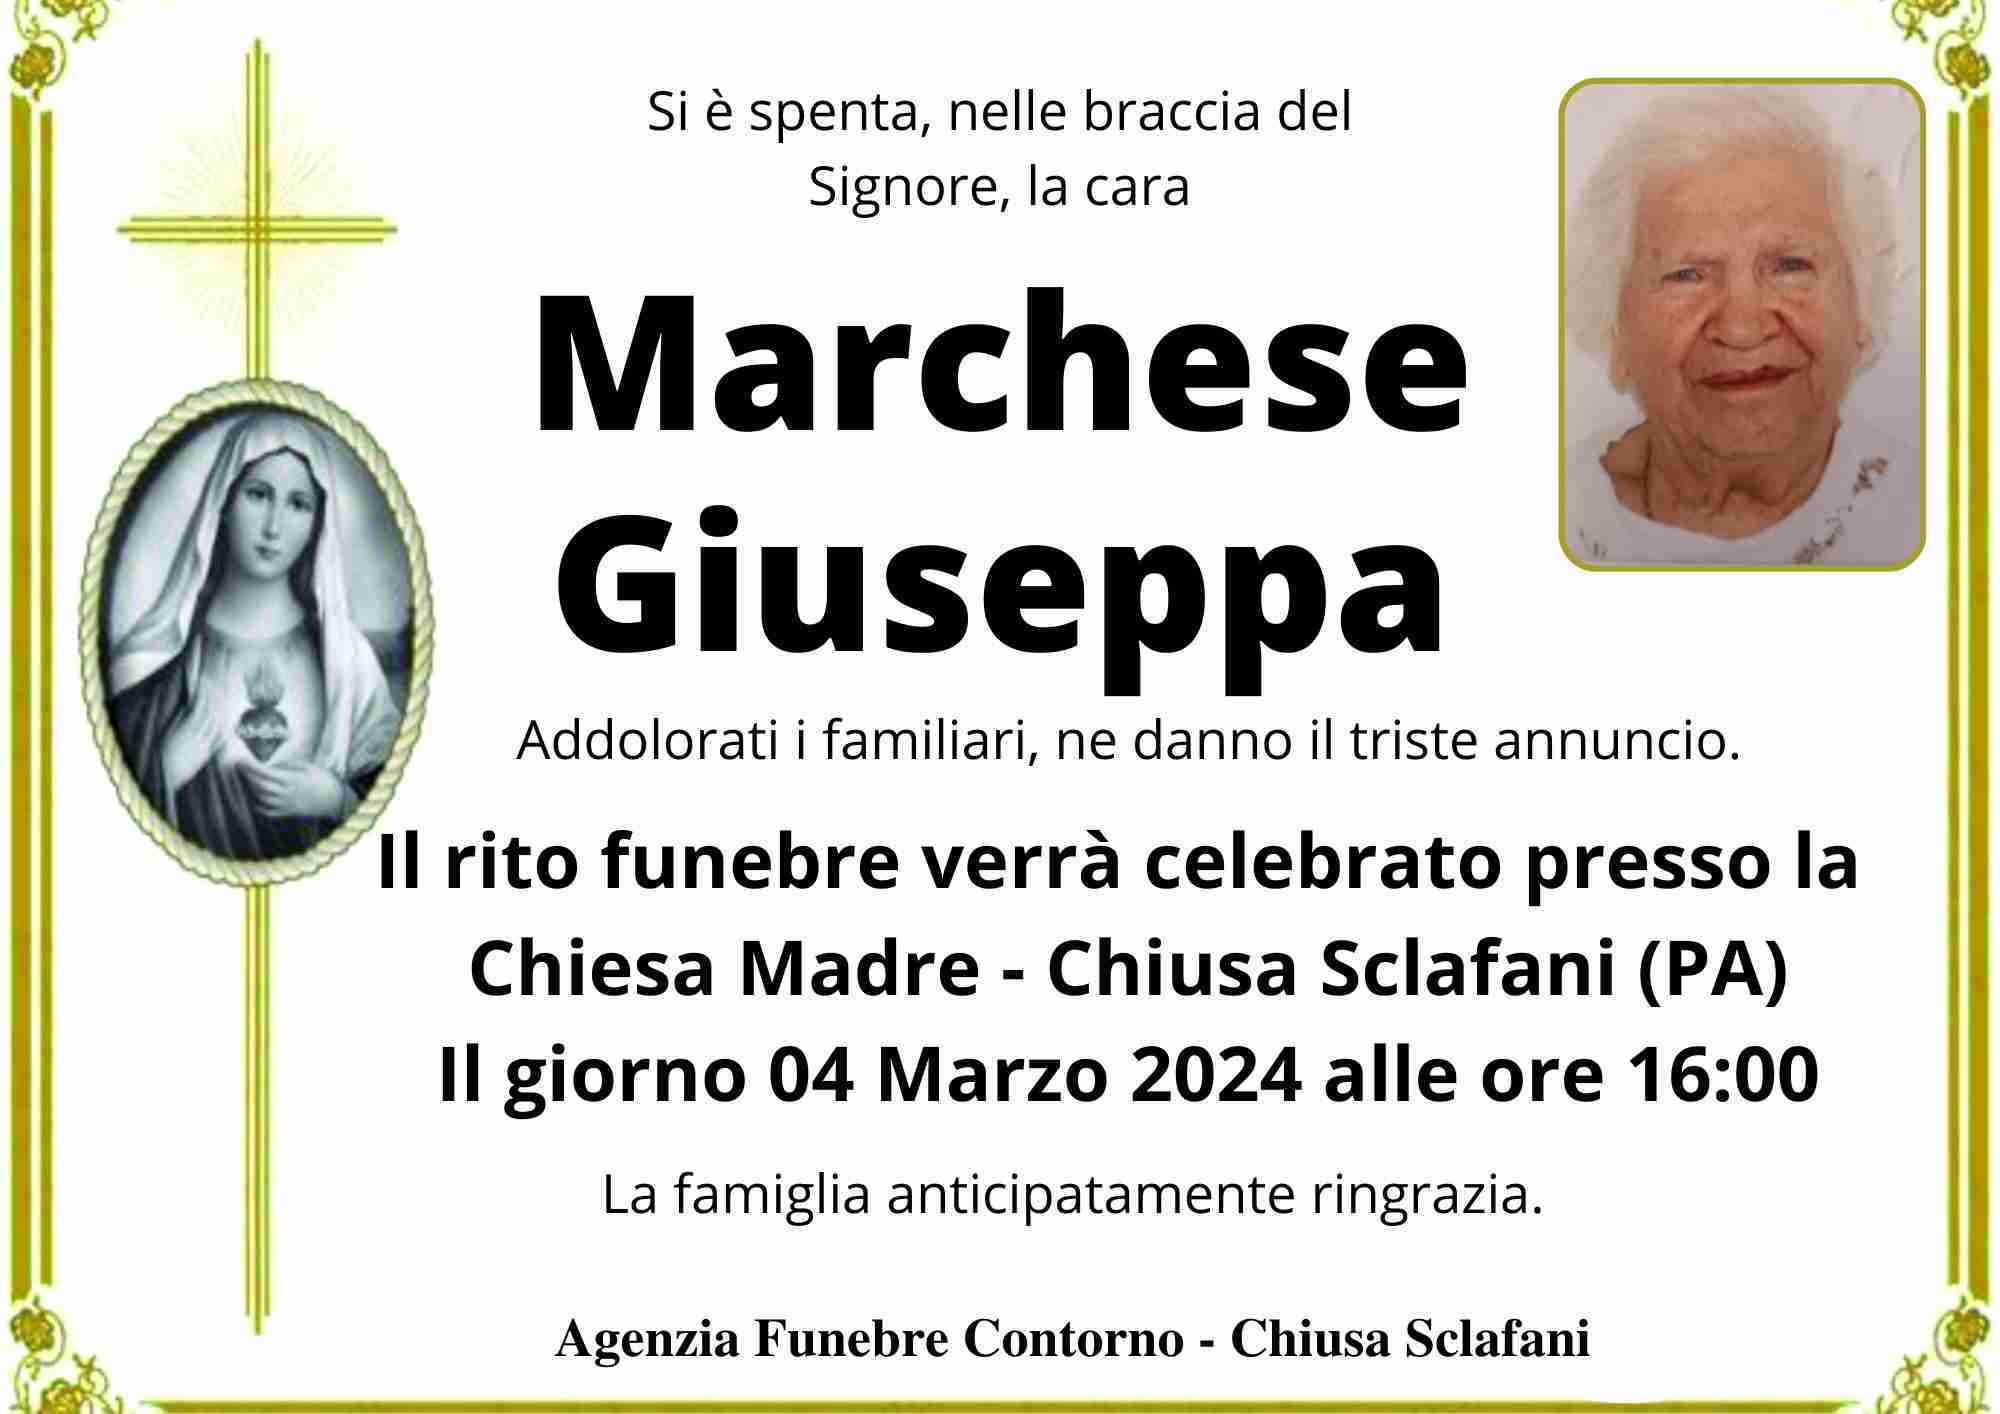 Giuseppa Marchese